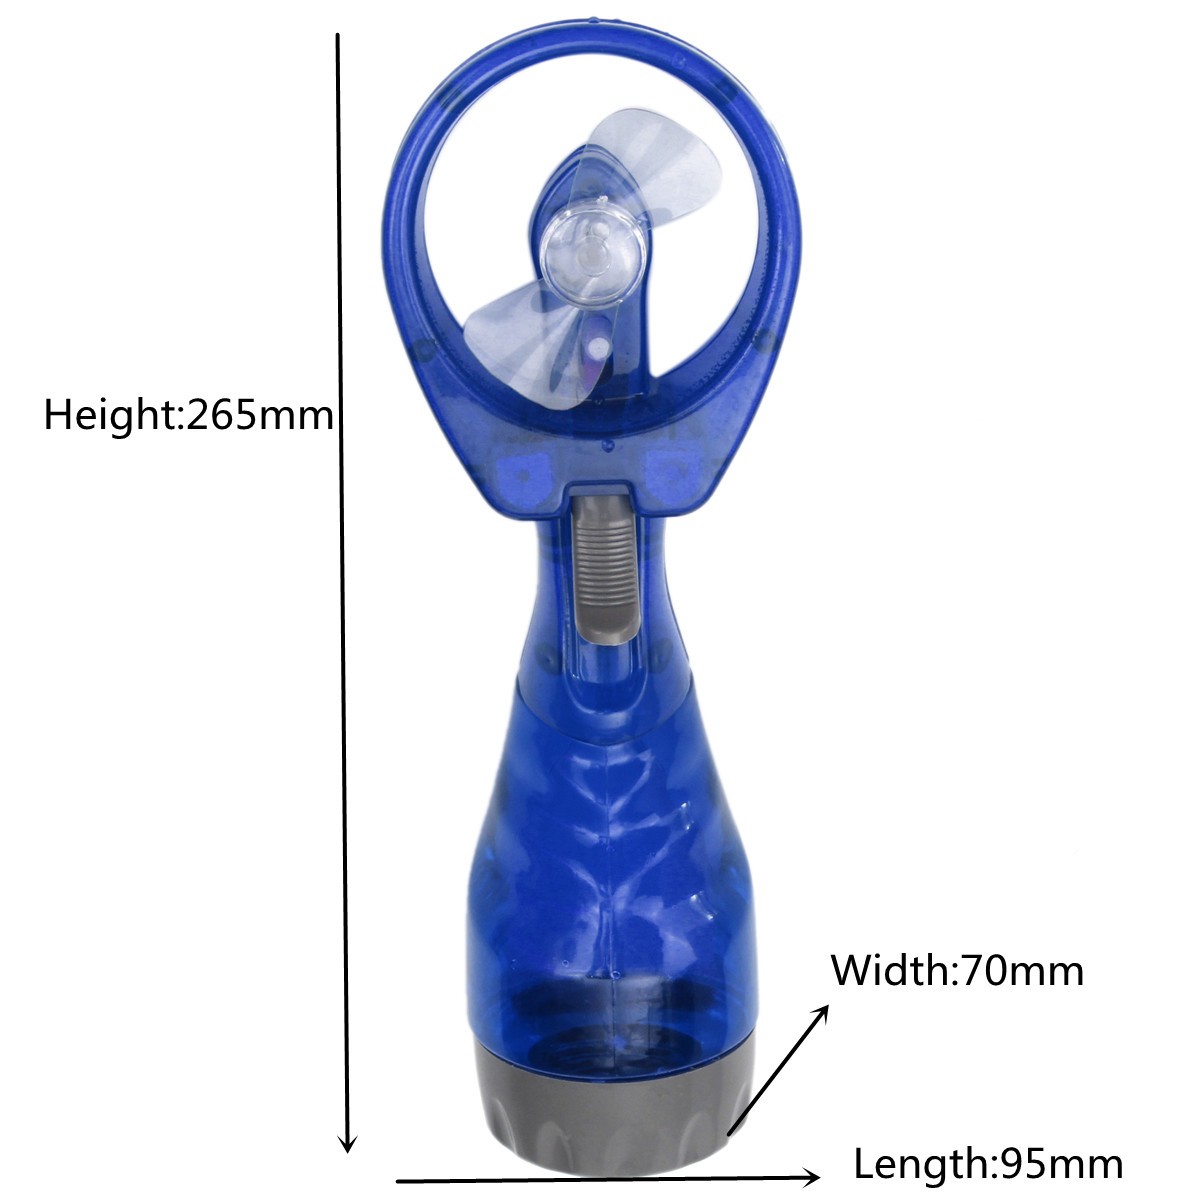 Portable-Mini-Hand-Held-Spray-Cooling-Fan-Water-Mist-Sport-Beach-Travel-Gadget-1319758